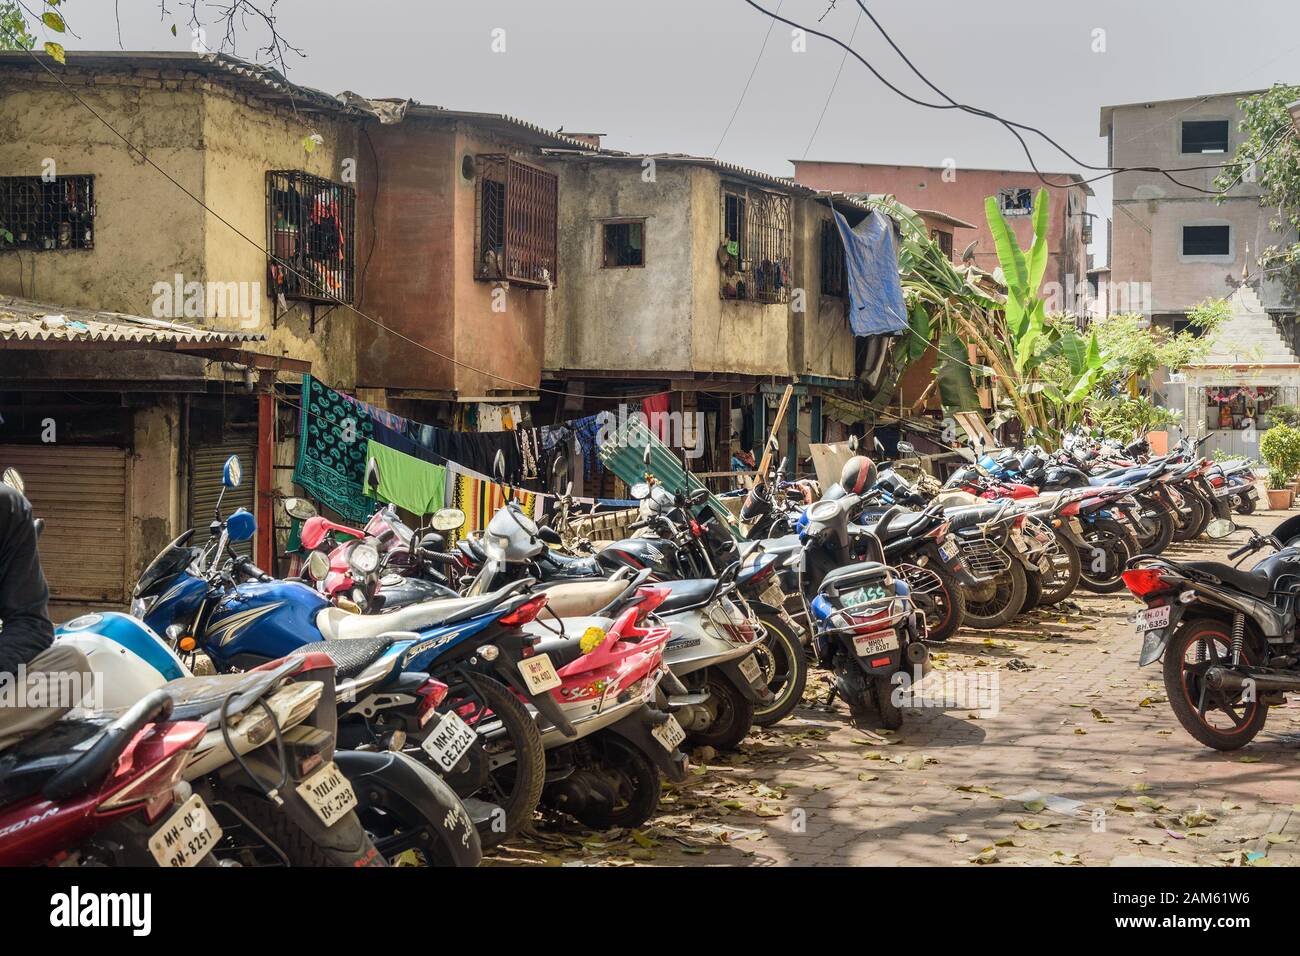 On the street in Dharavi Slum at Mumbai. India Stock Photo